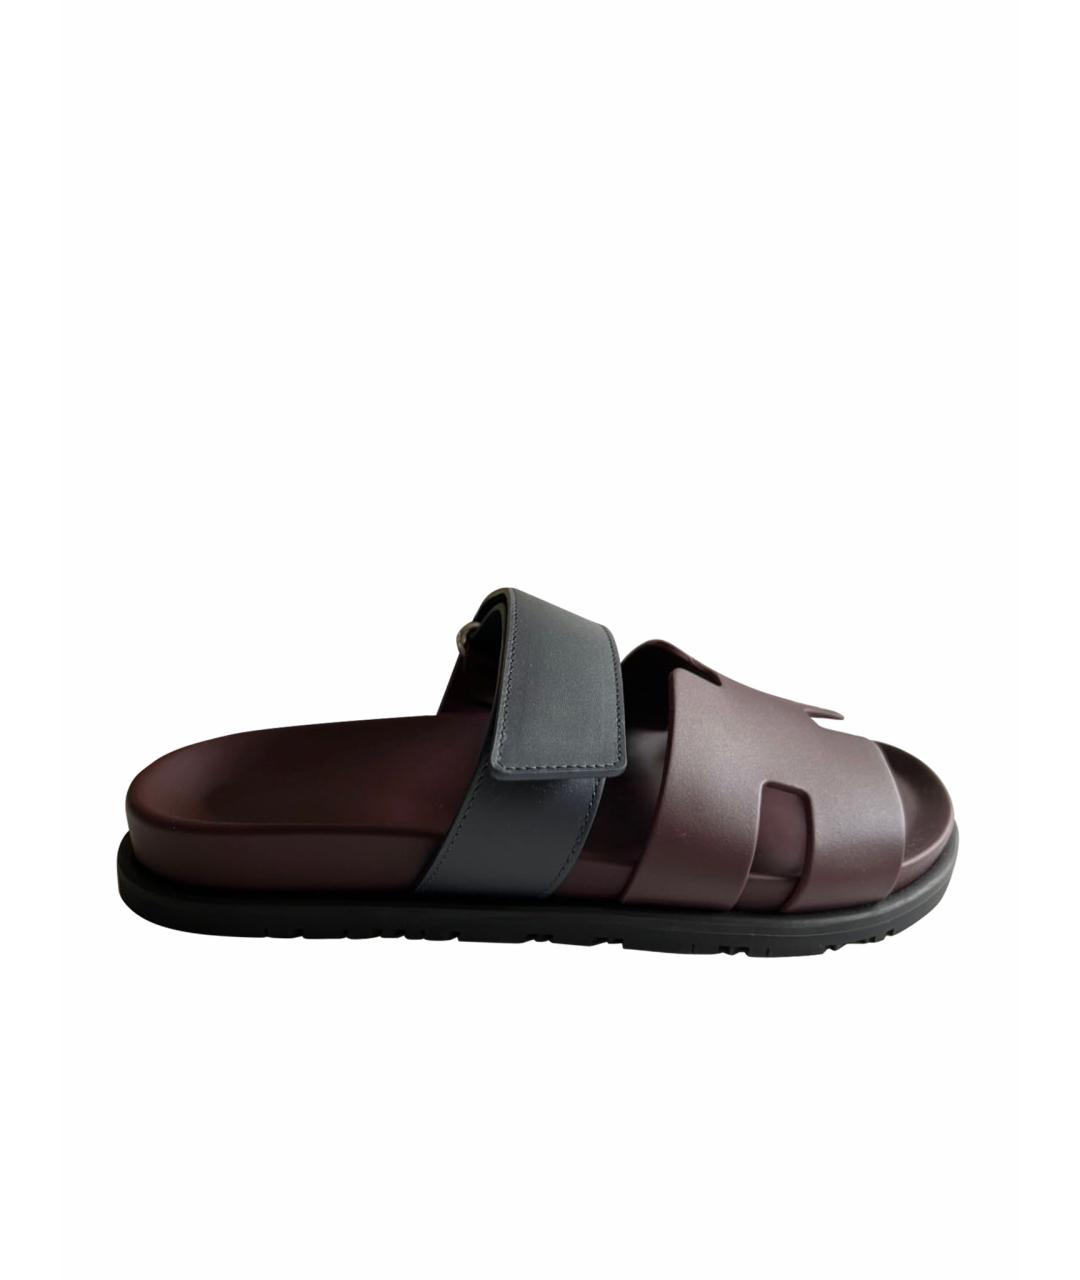 HERMES PRE-OWNED Бордовые кожаные сандалии, фото 1